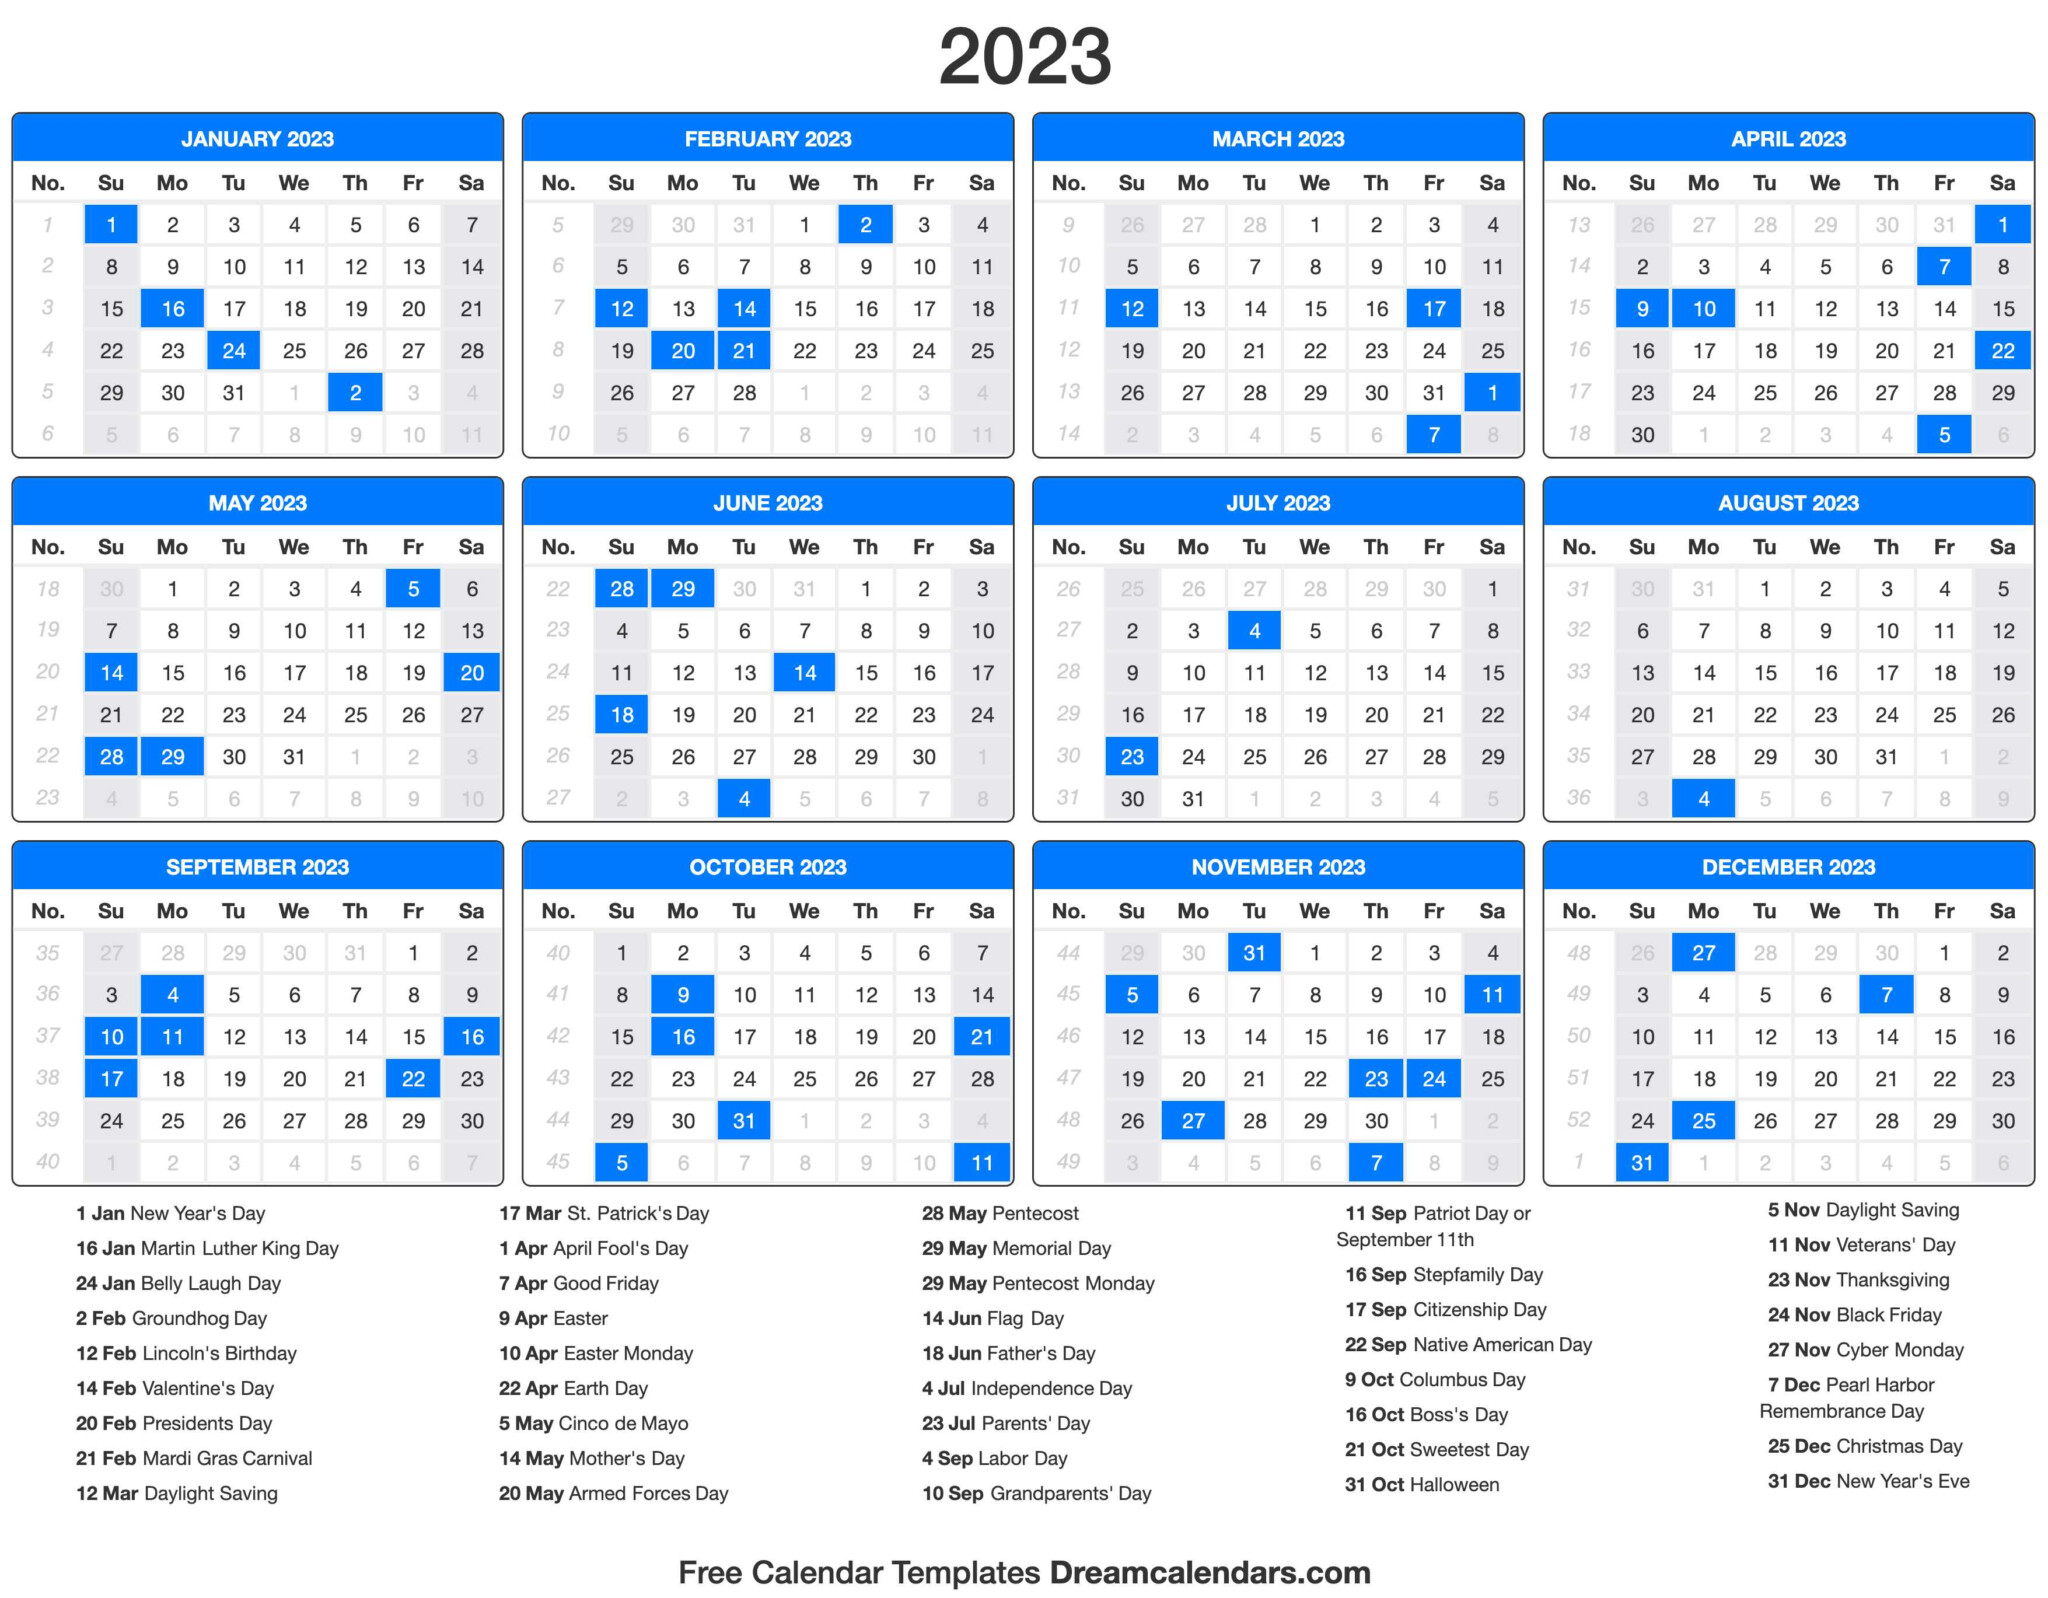 2023 Calendar Year Holiday Schedule